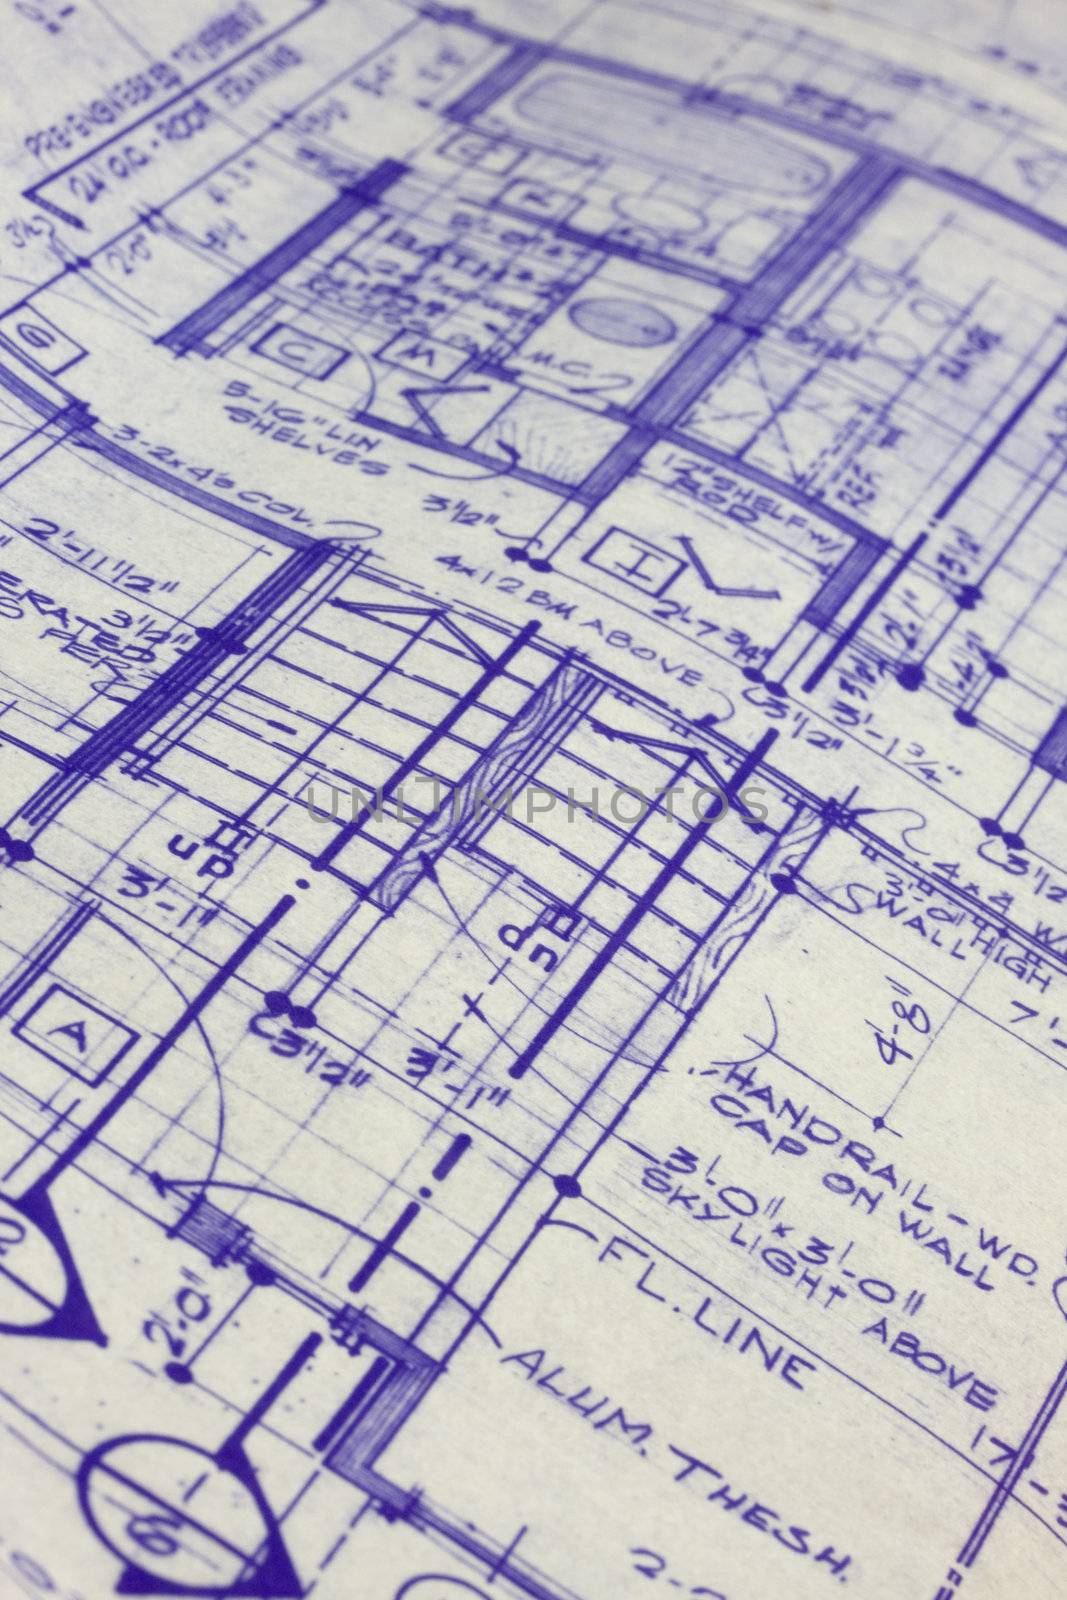 house blueprints by PixelsAway